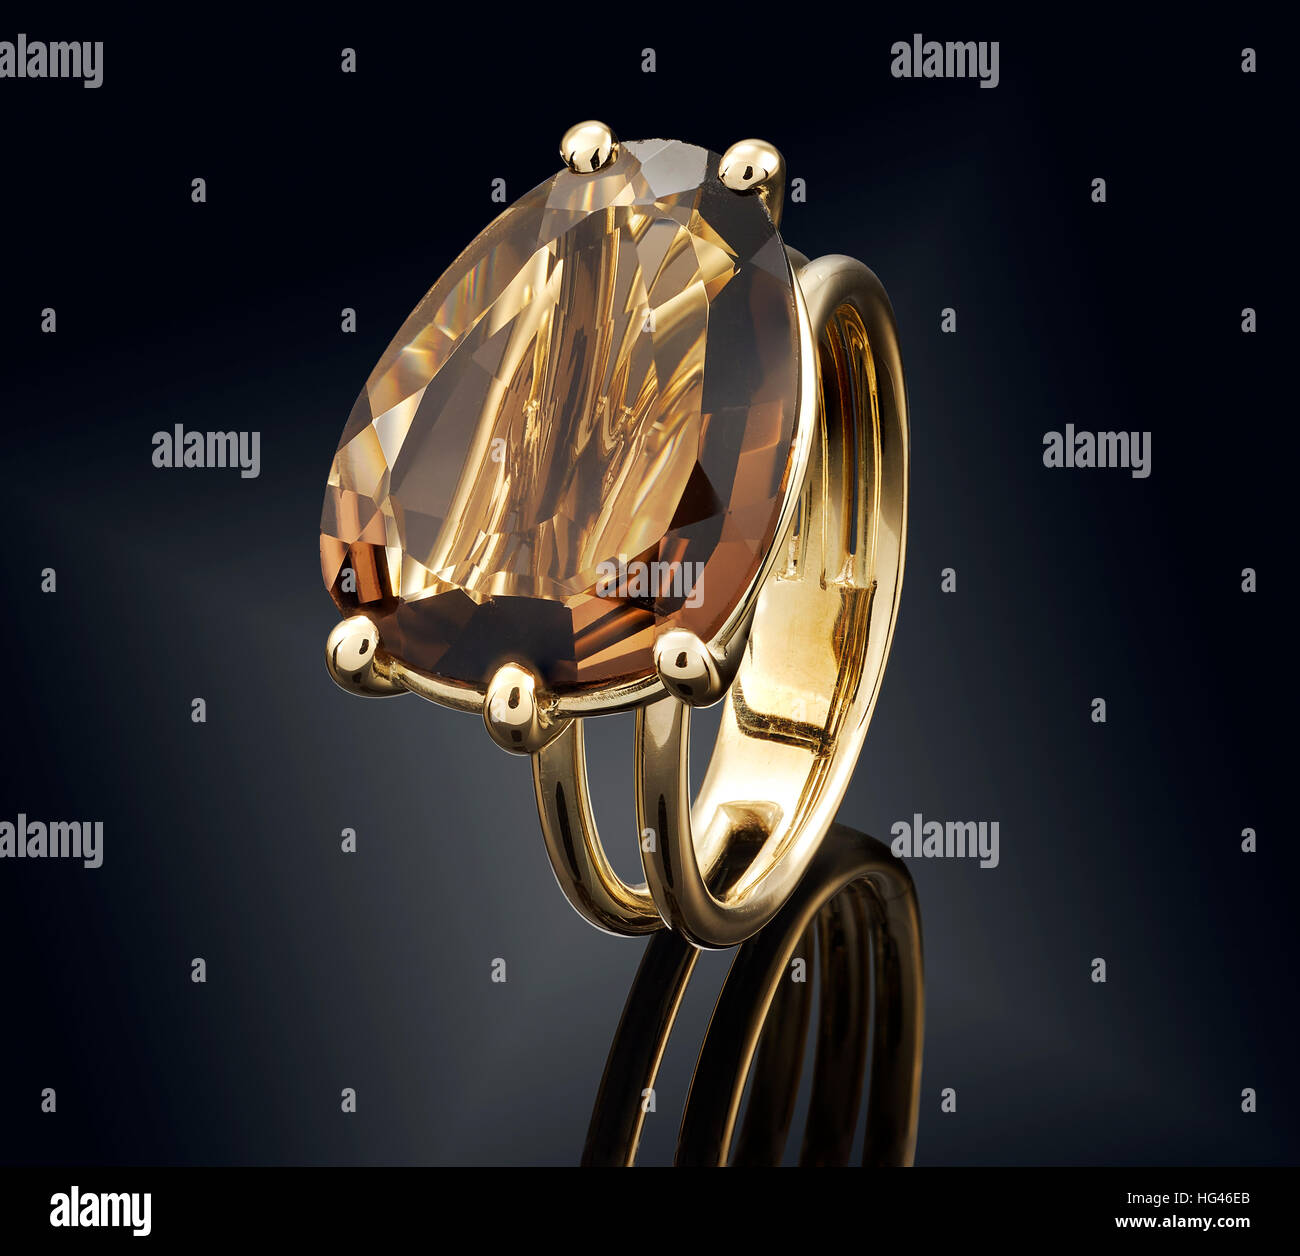 Golden ring with gemstone isolated on black background. Stock Photo